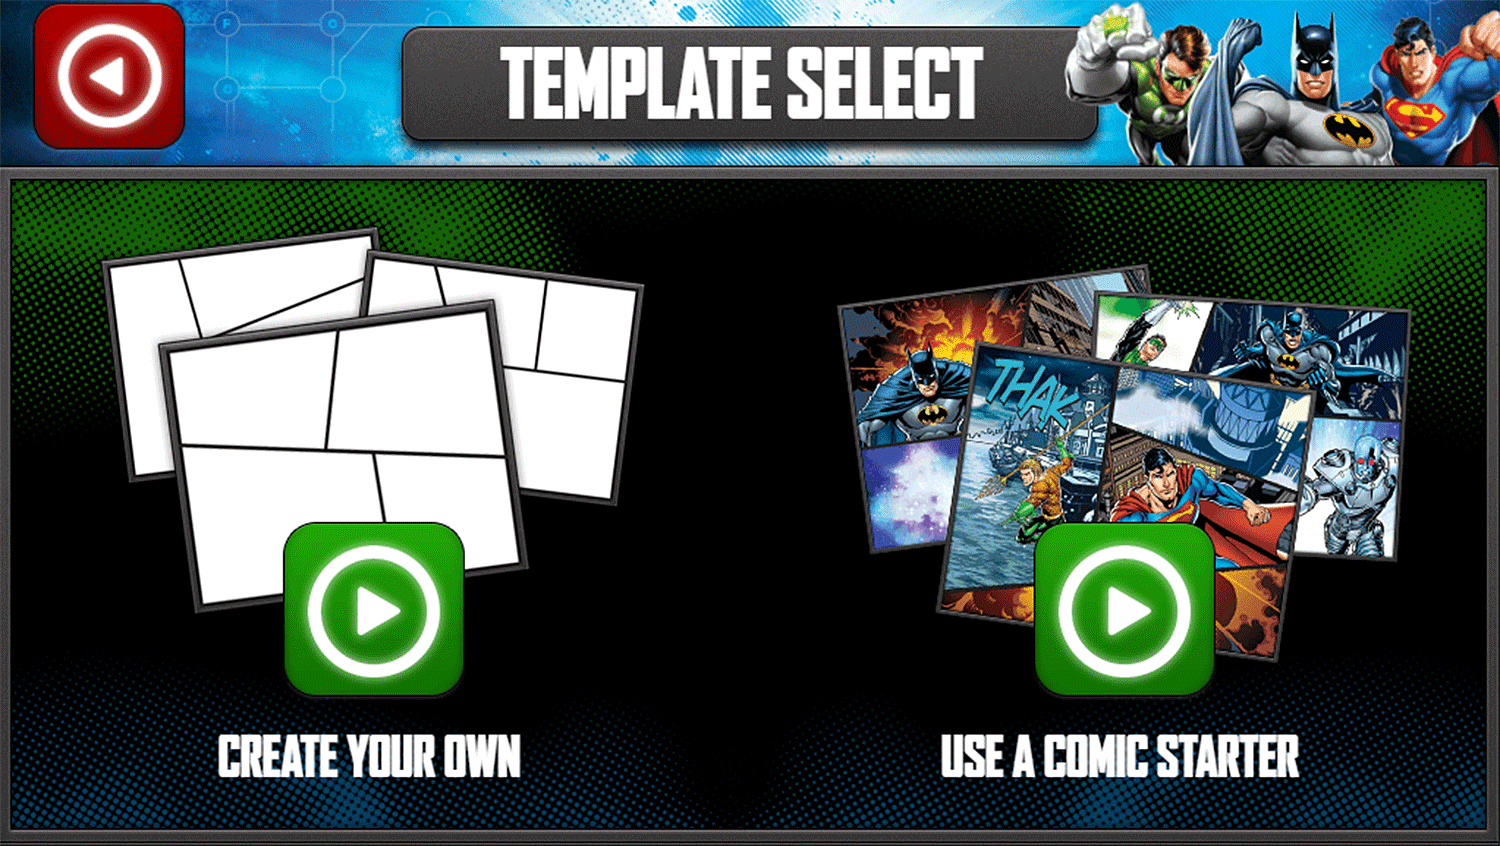 Justice League Comic Creator Game Template Select Screenshot.